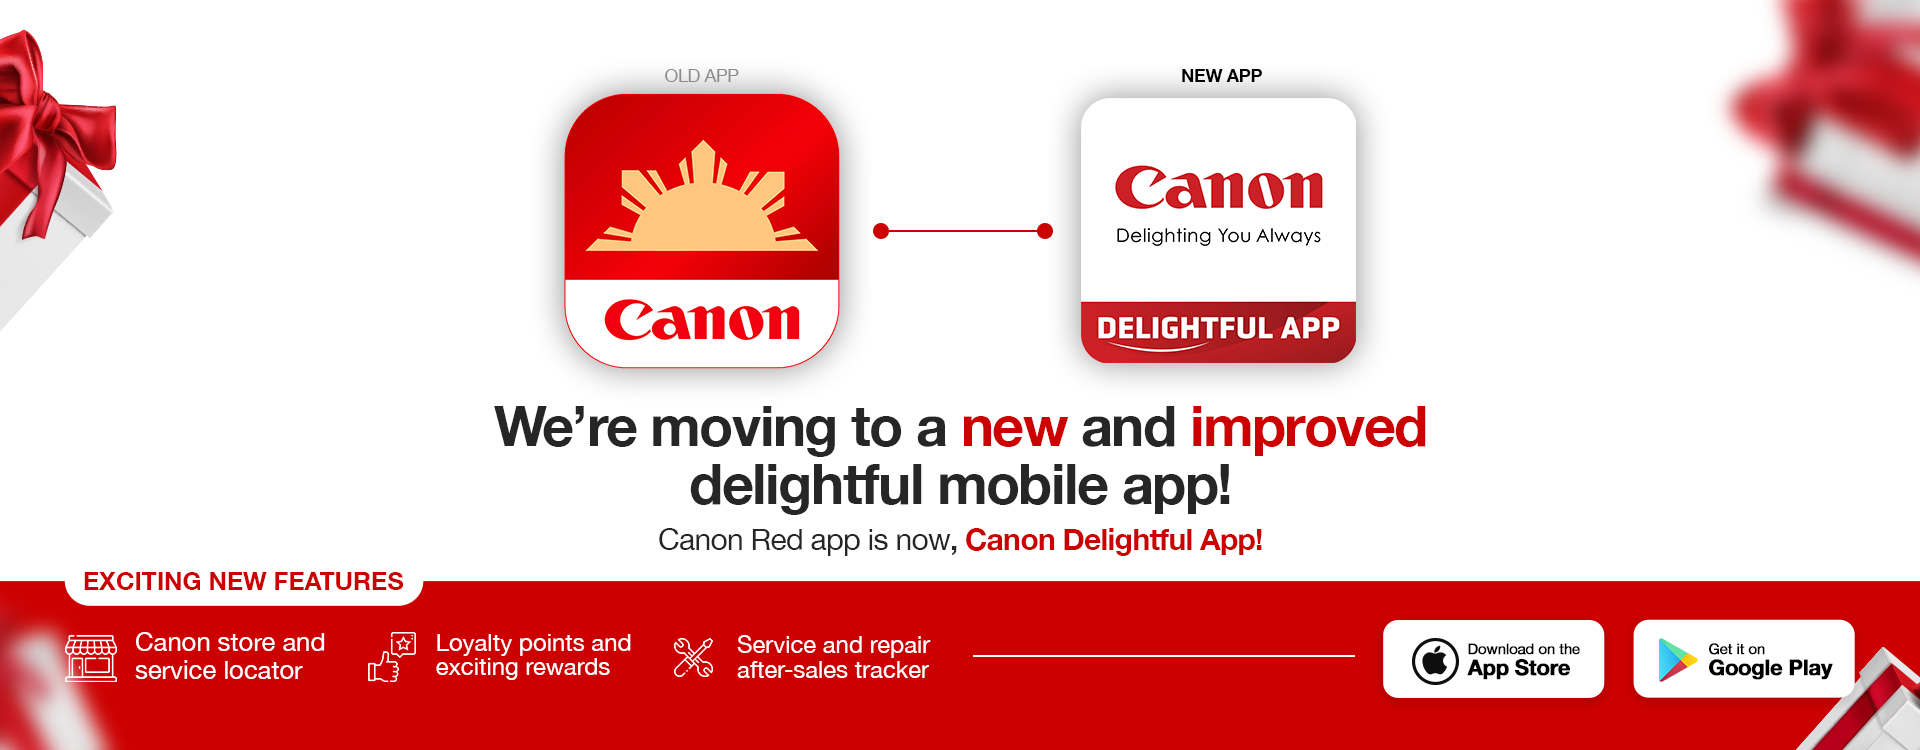 231005_Canon Delightful App Migration WEB.png